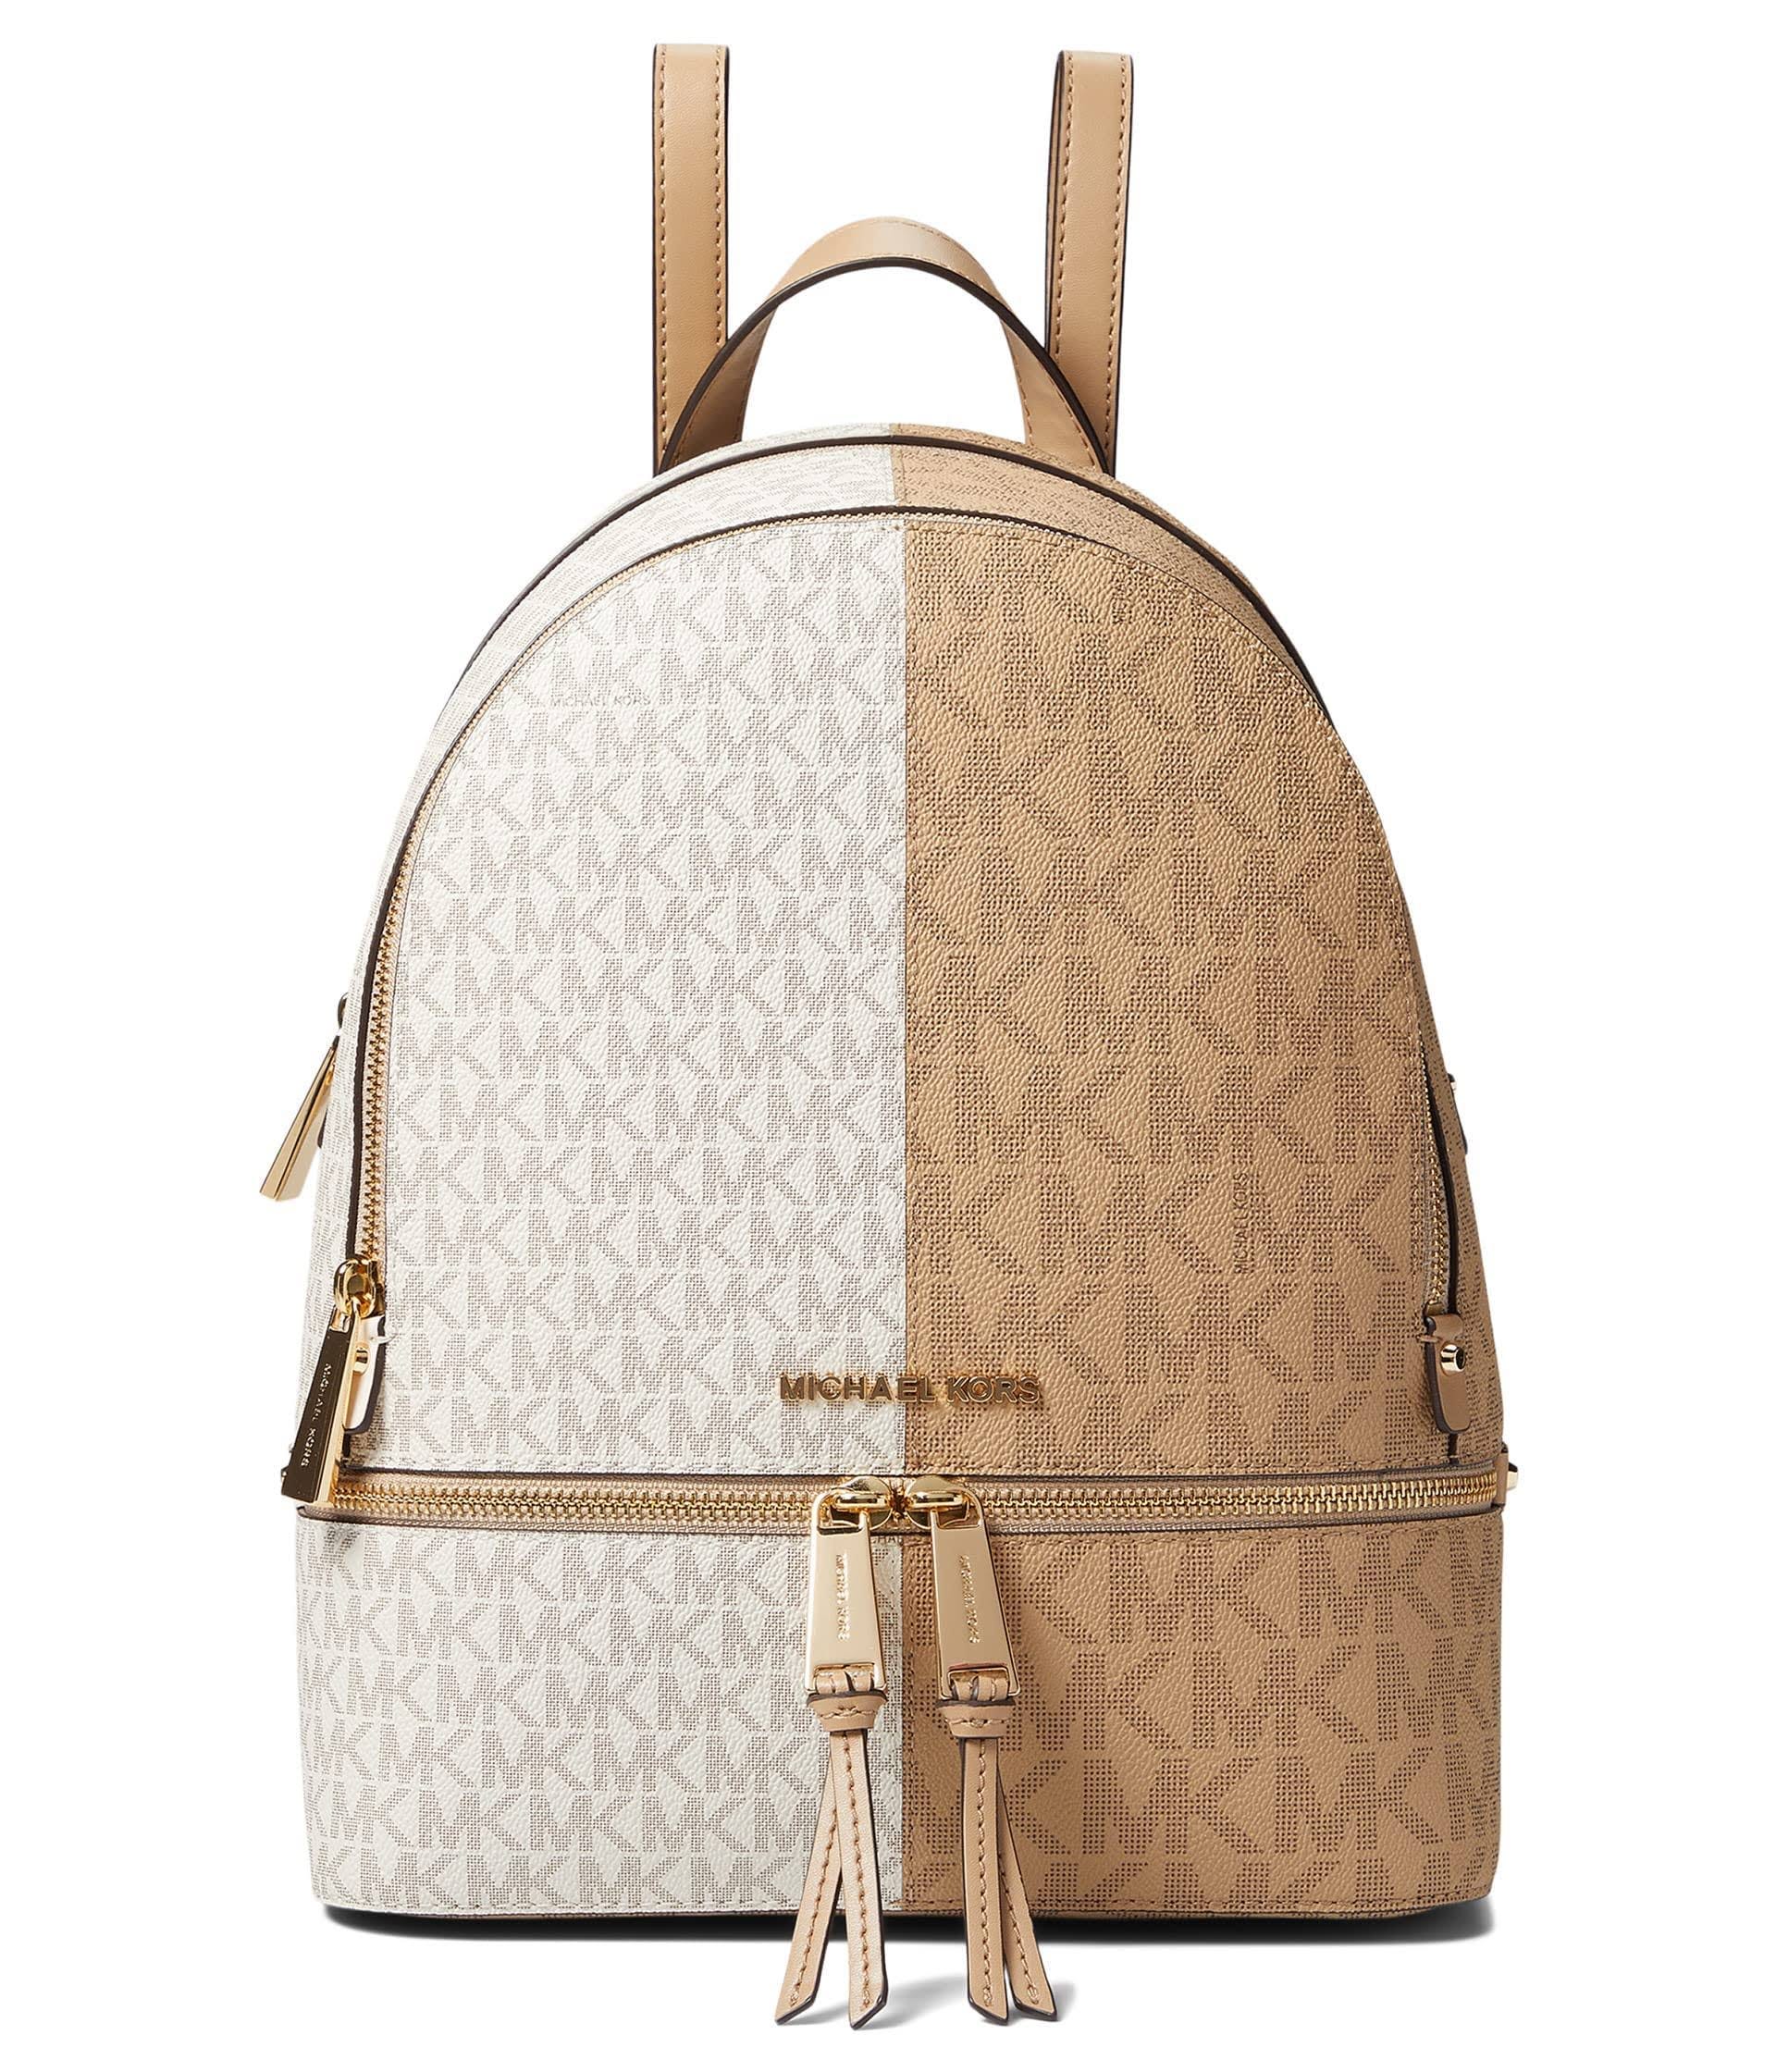 Michael Kors Rhea Medium Backpack - Stylish and Versatile | Image